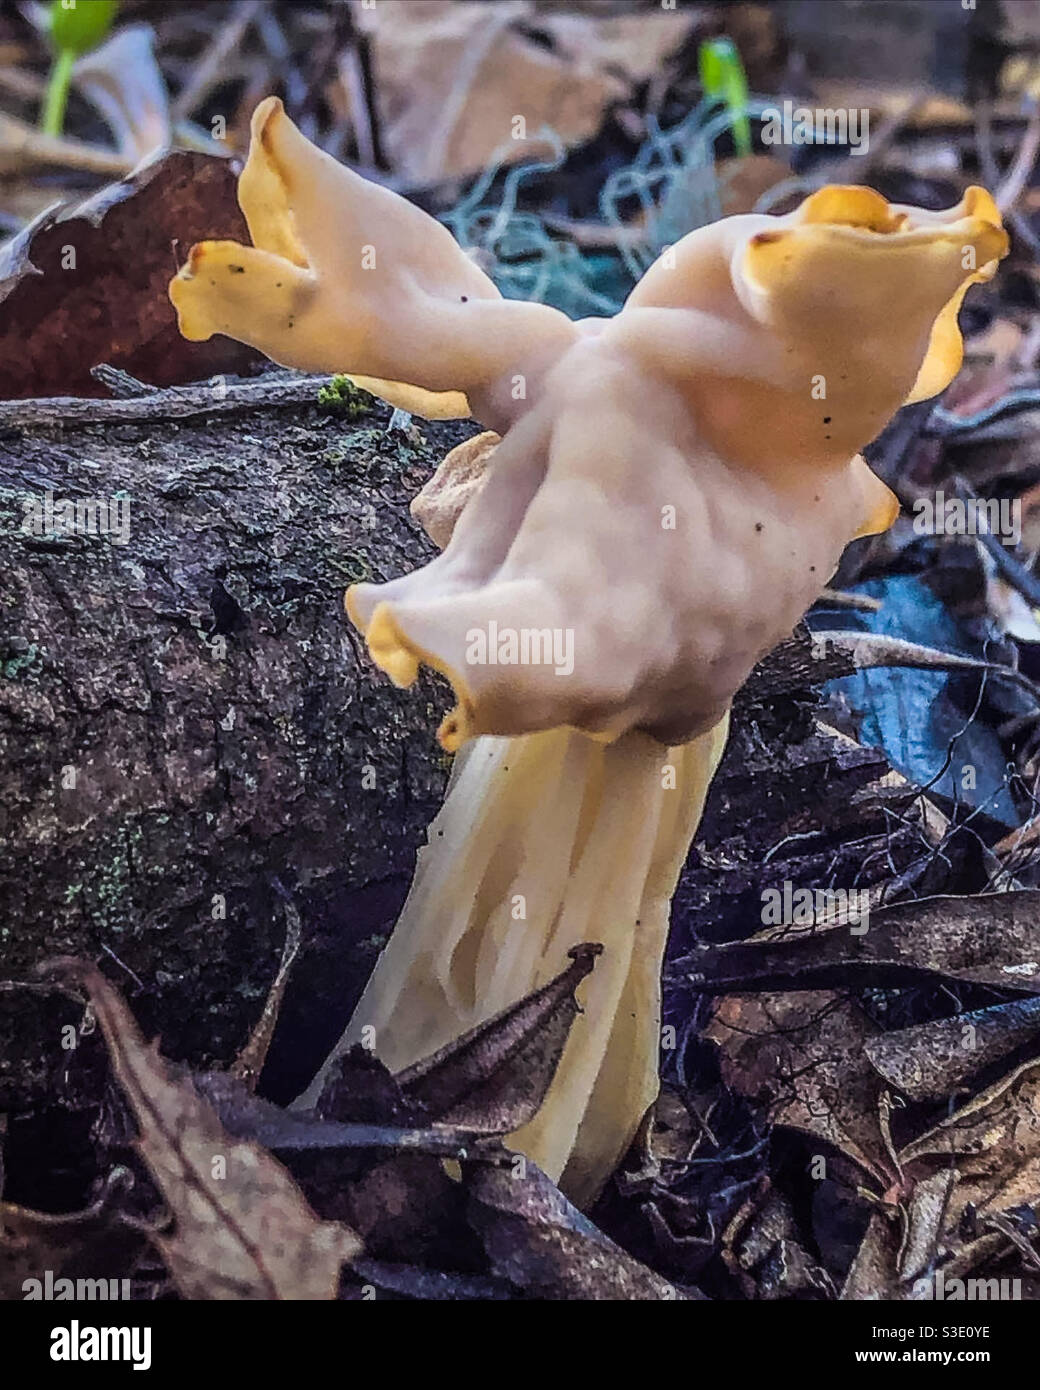 False Morel Mushroom - looks a bit like a deer with antlers Stock Photo